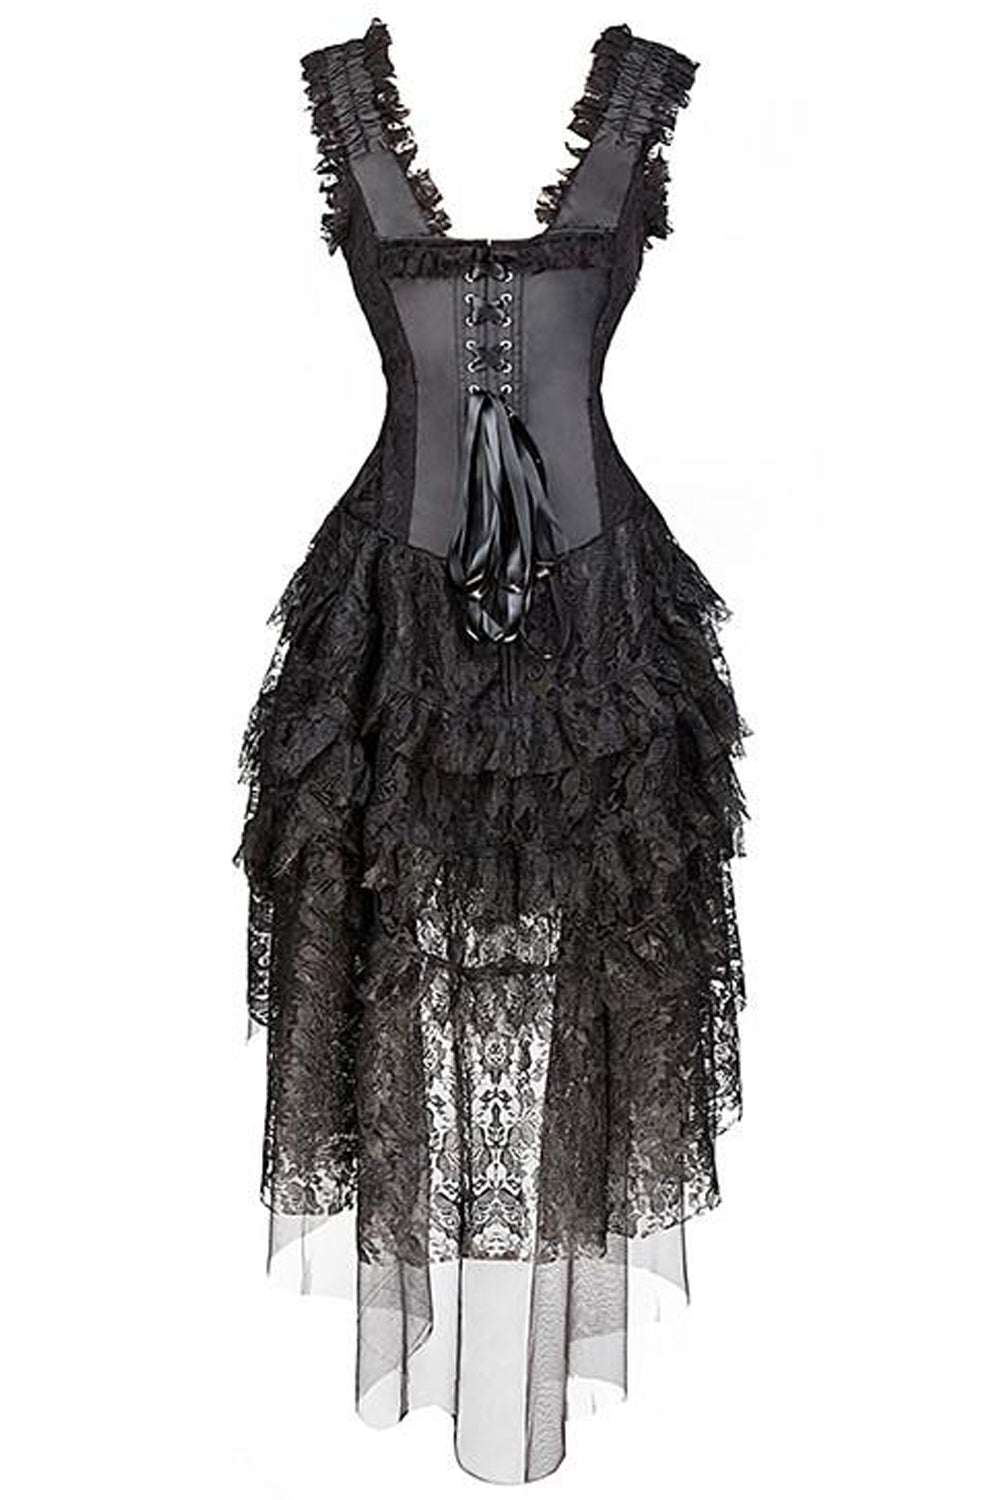 Atomic Black Burlesque Inspired Corset and Skirt Set